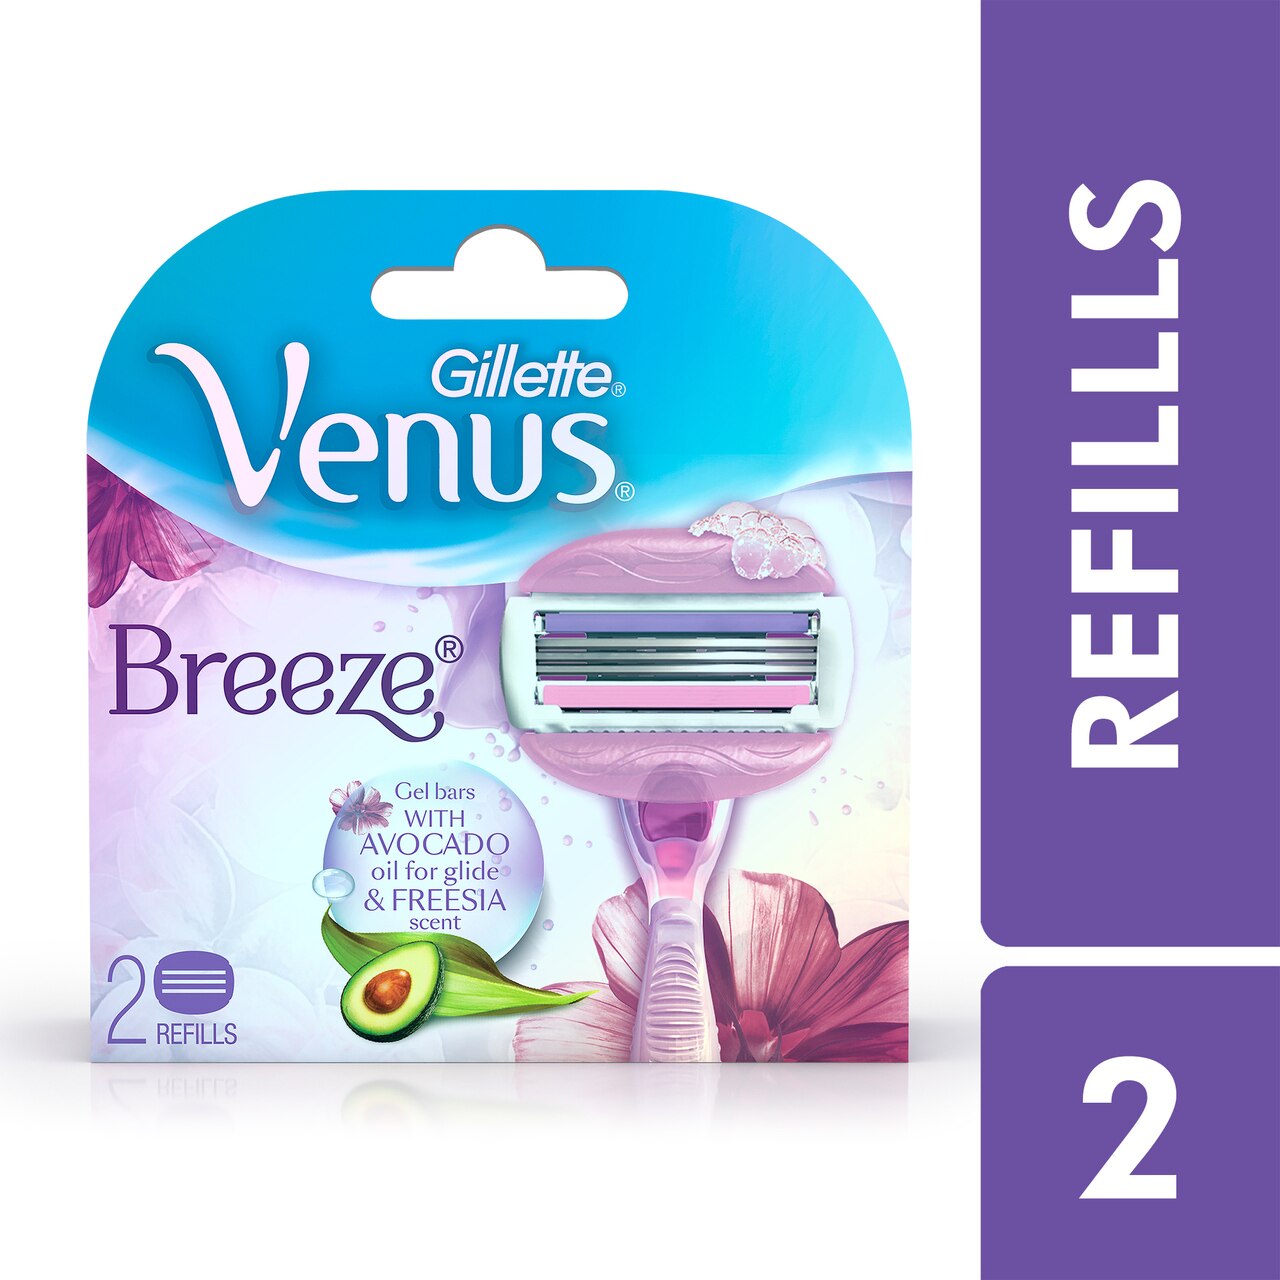 Gillette Venus Breeze Hair Removal Razor Blades/Refills/Cartridges for Women, 2 Pieces (Avocado Oils & Body Butter)